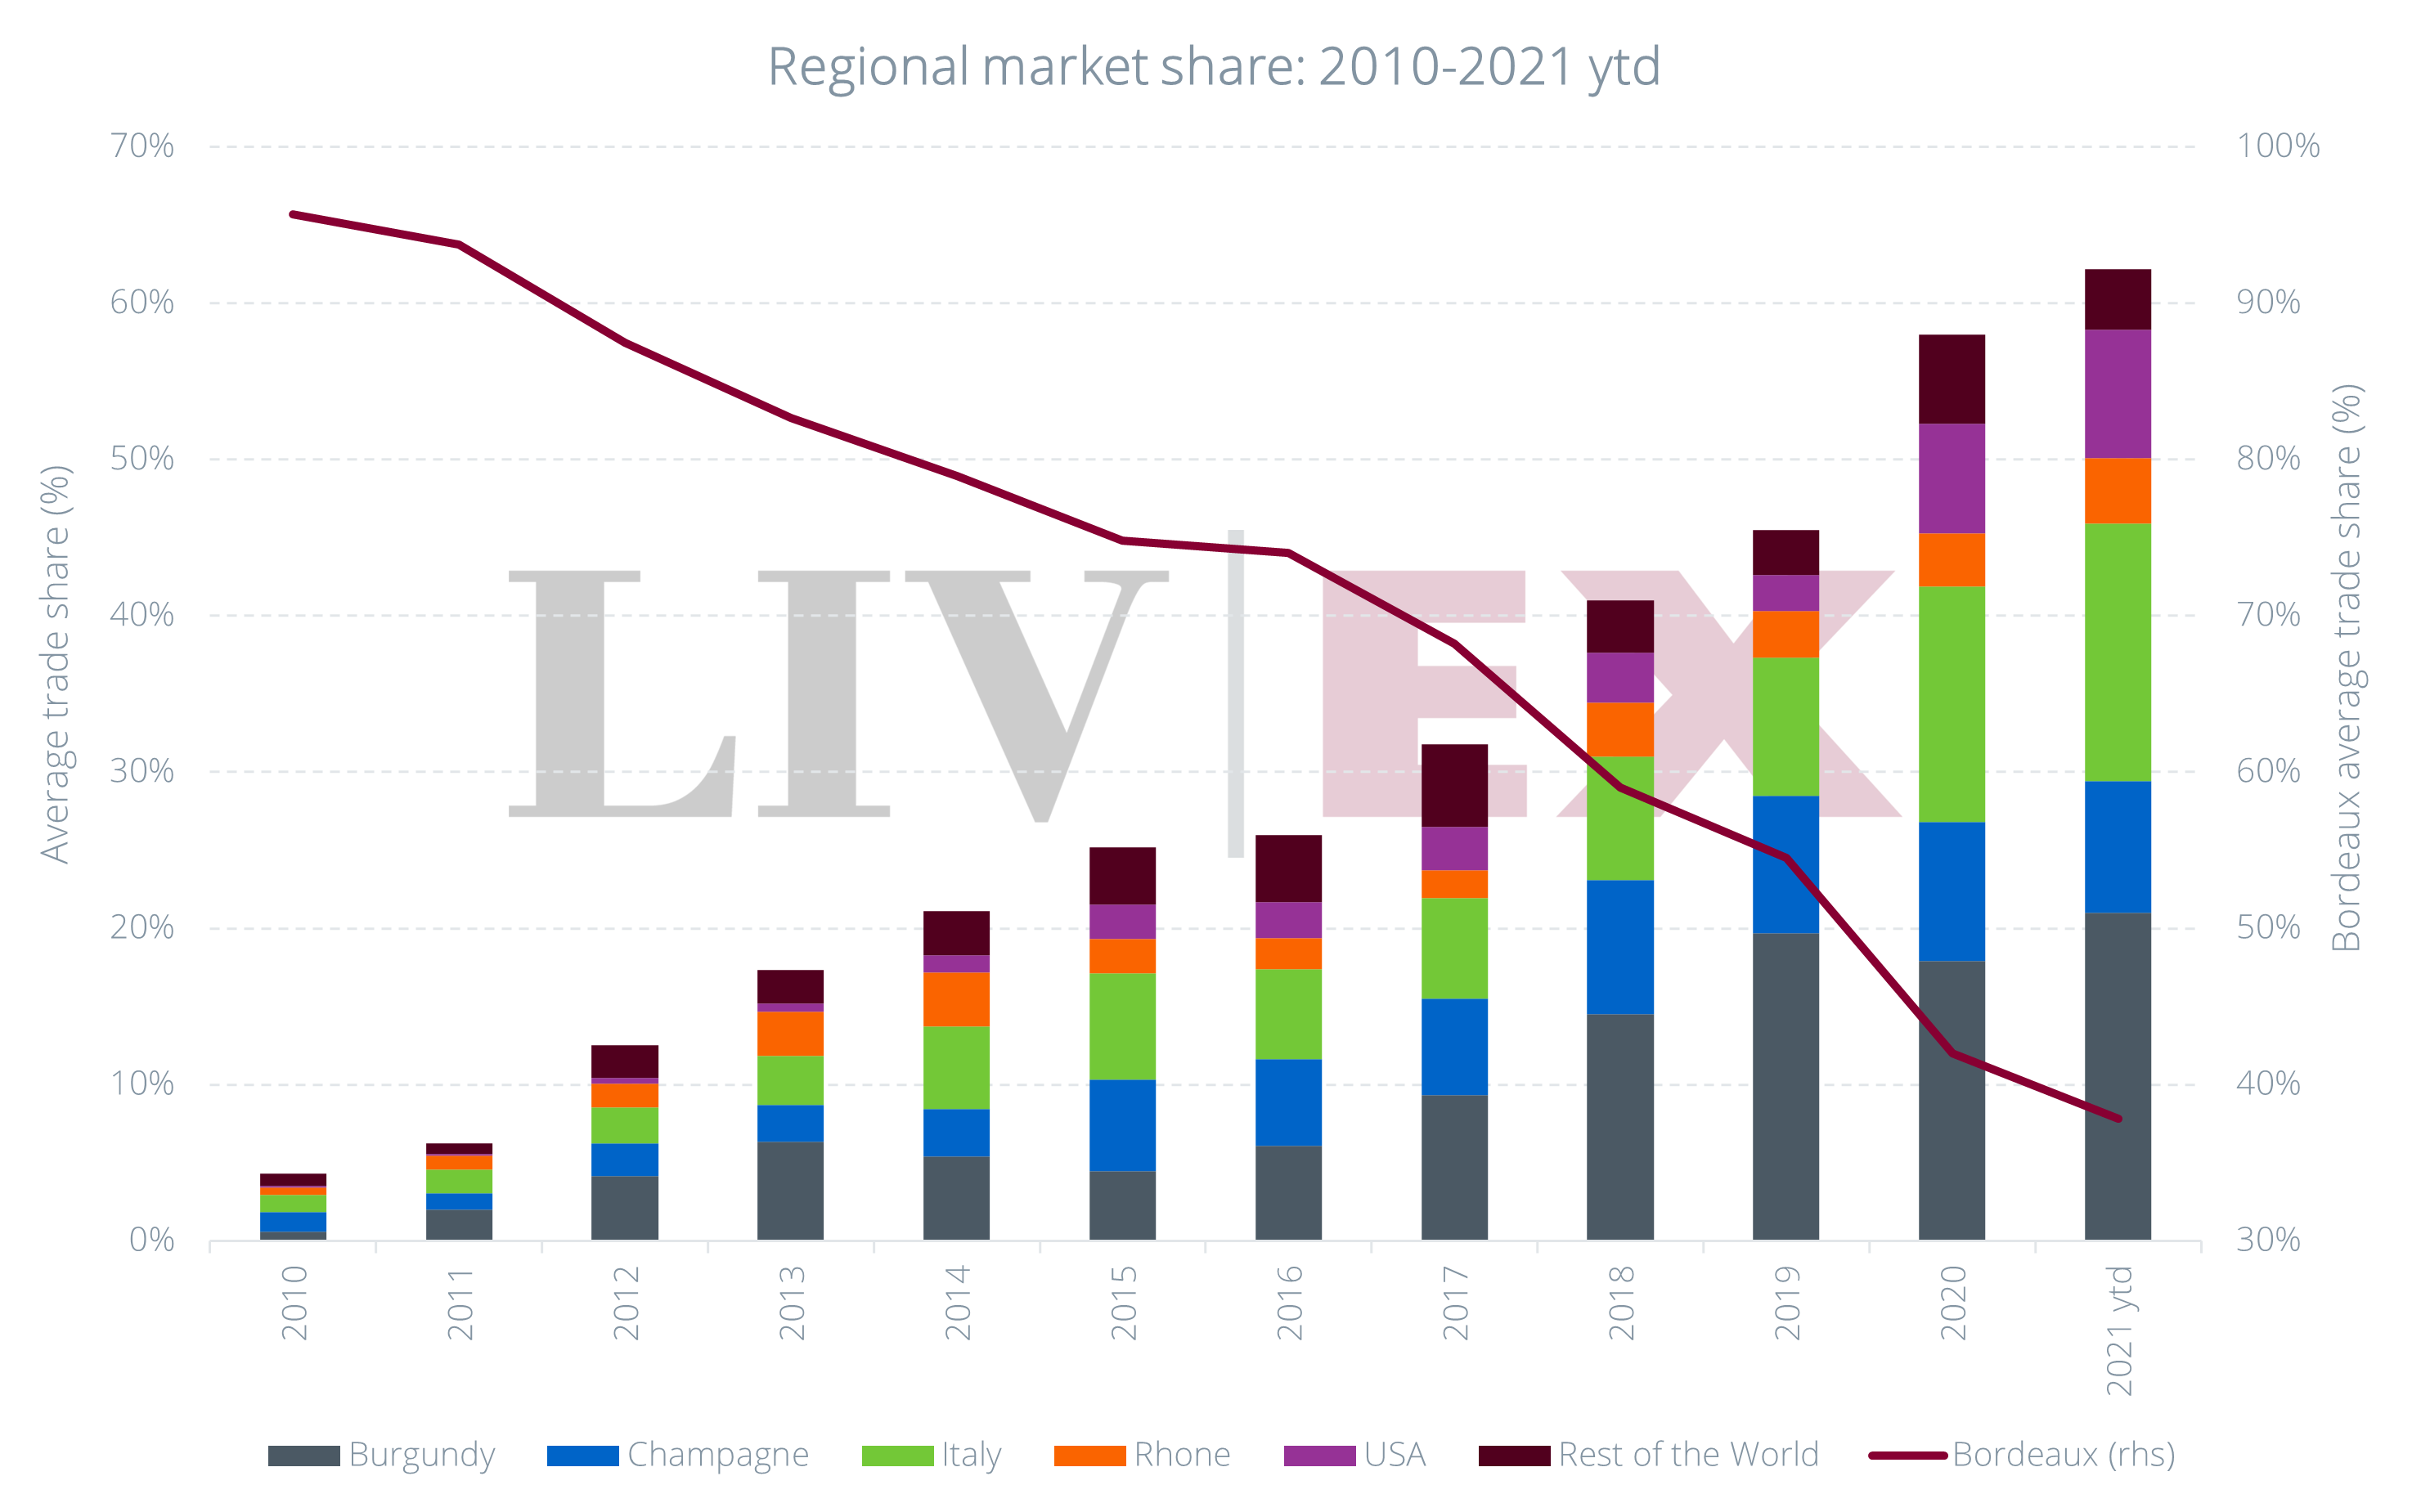 Chart 2: Regional market share 2010-2021